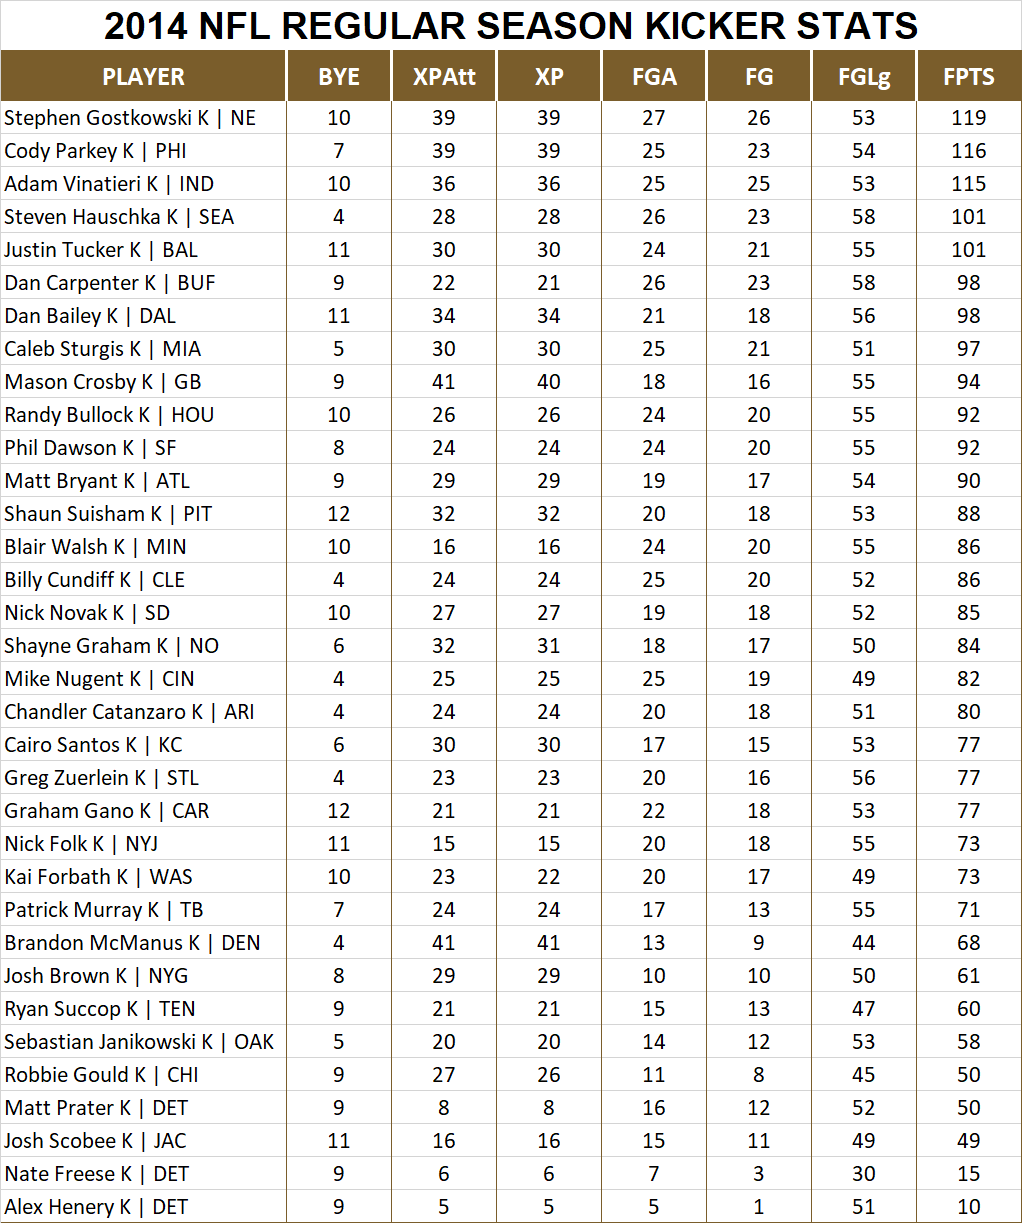 2014 National Football League Pool Season Player Kicker Stats